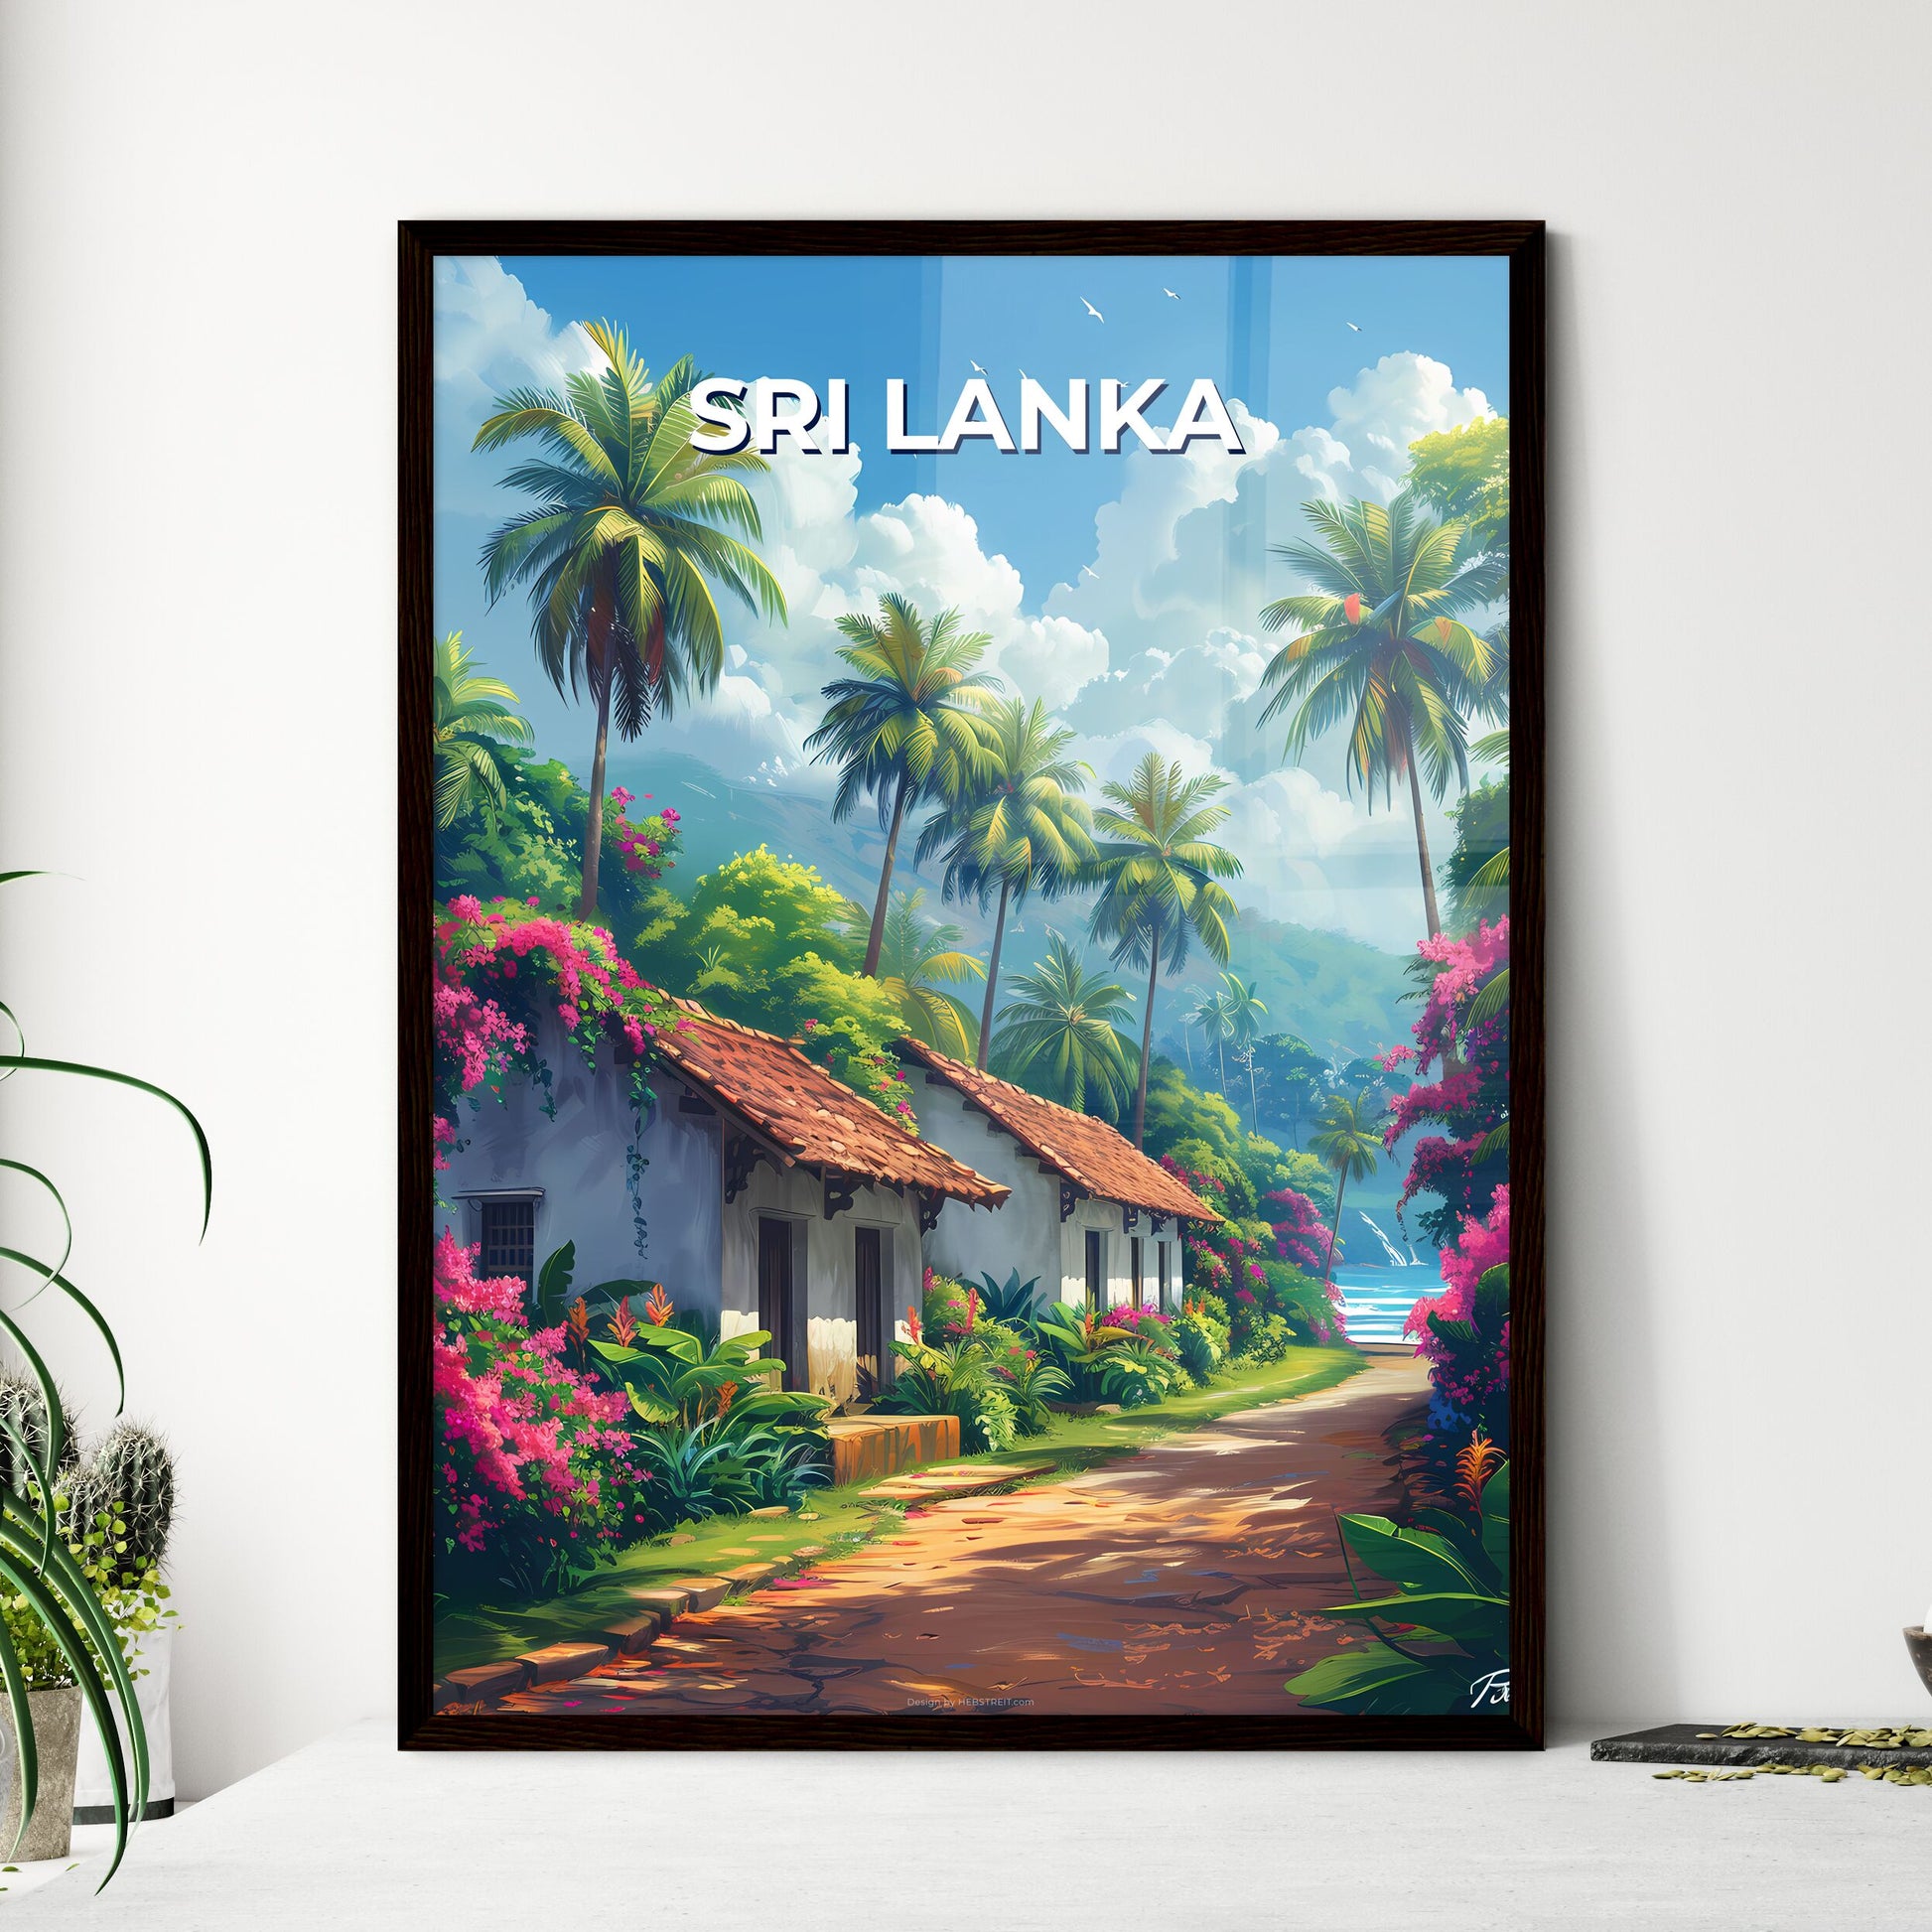 South Asia Painting, Home, Sri Lanka, Road, Palm Trees, Flowers, Vibrant, Art